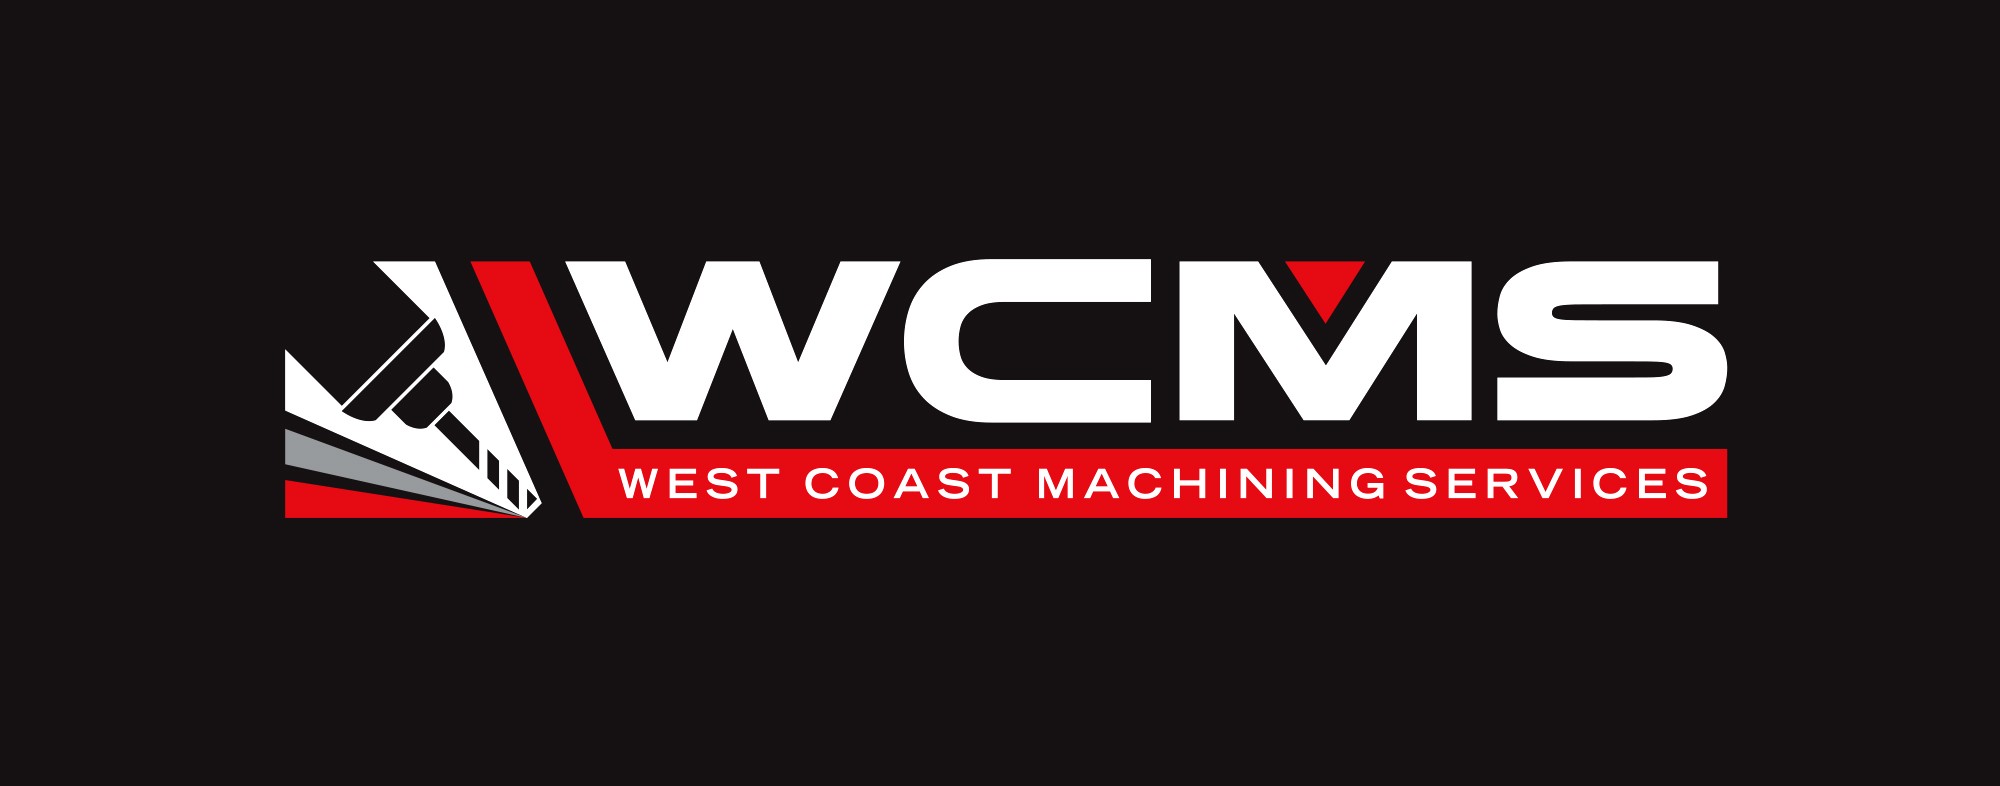 WEST COAST MACHINING SERVICES logo